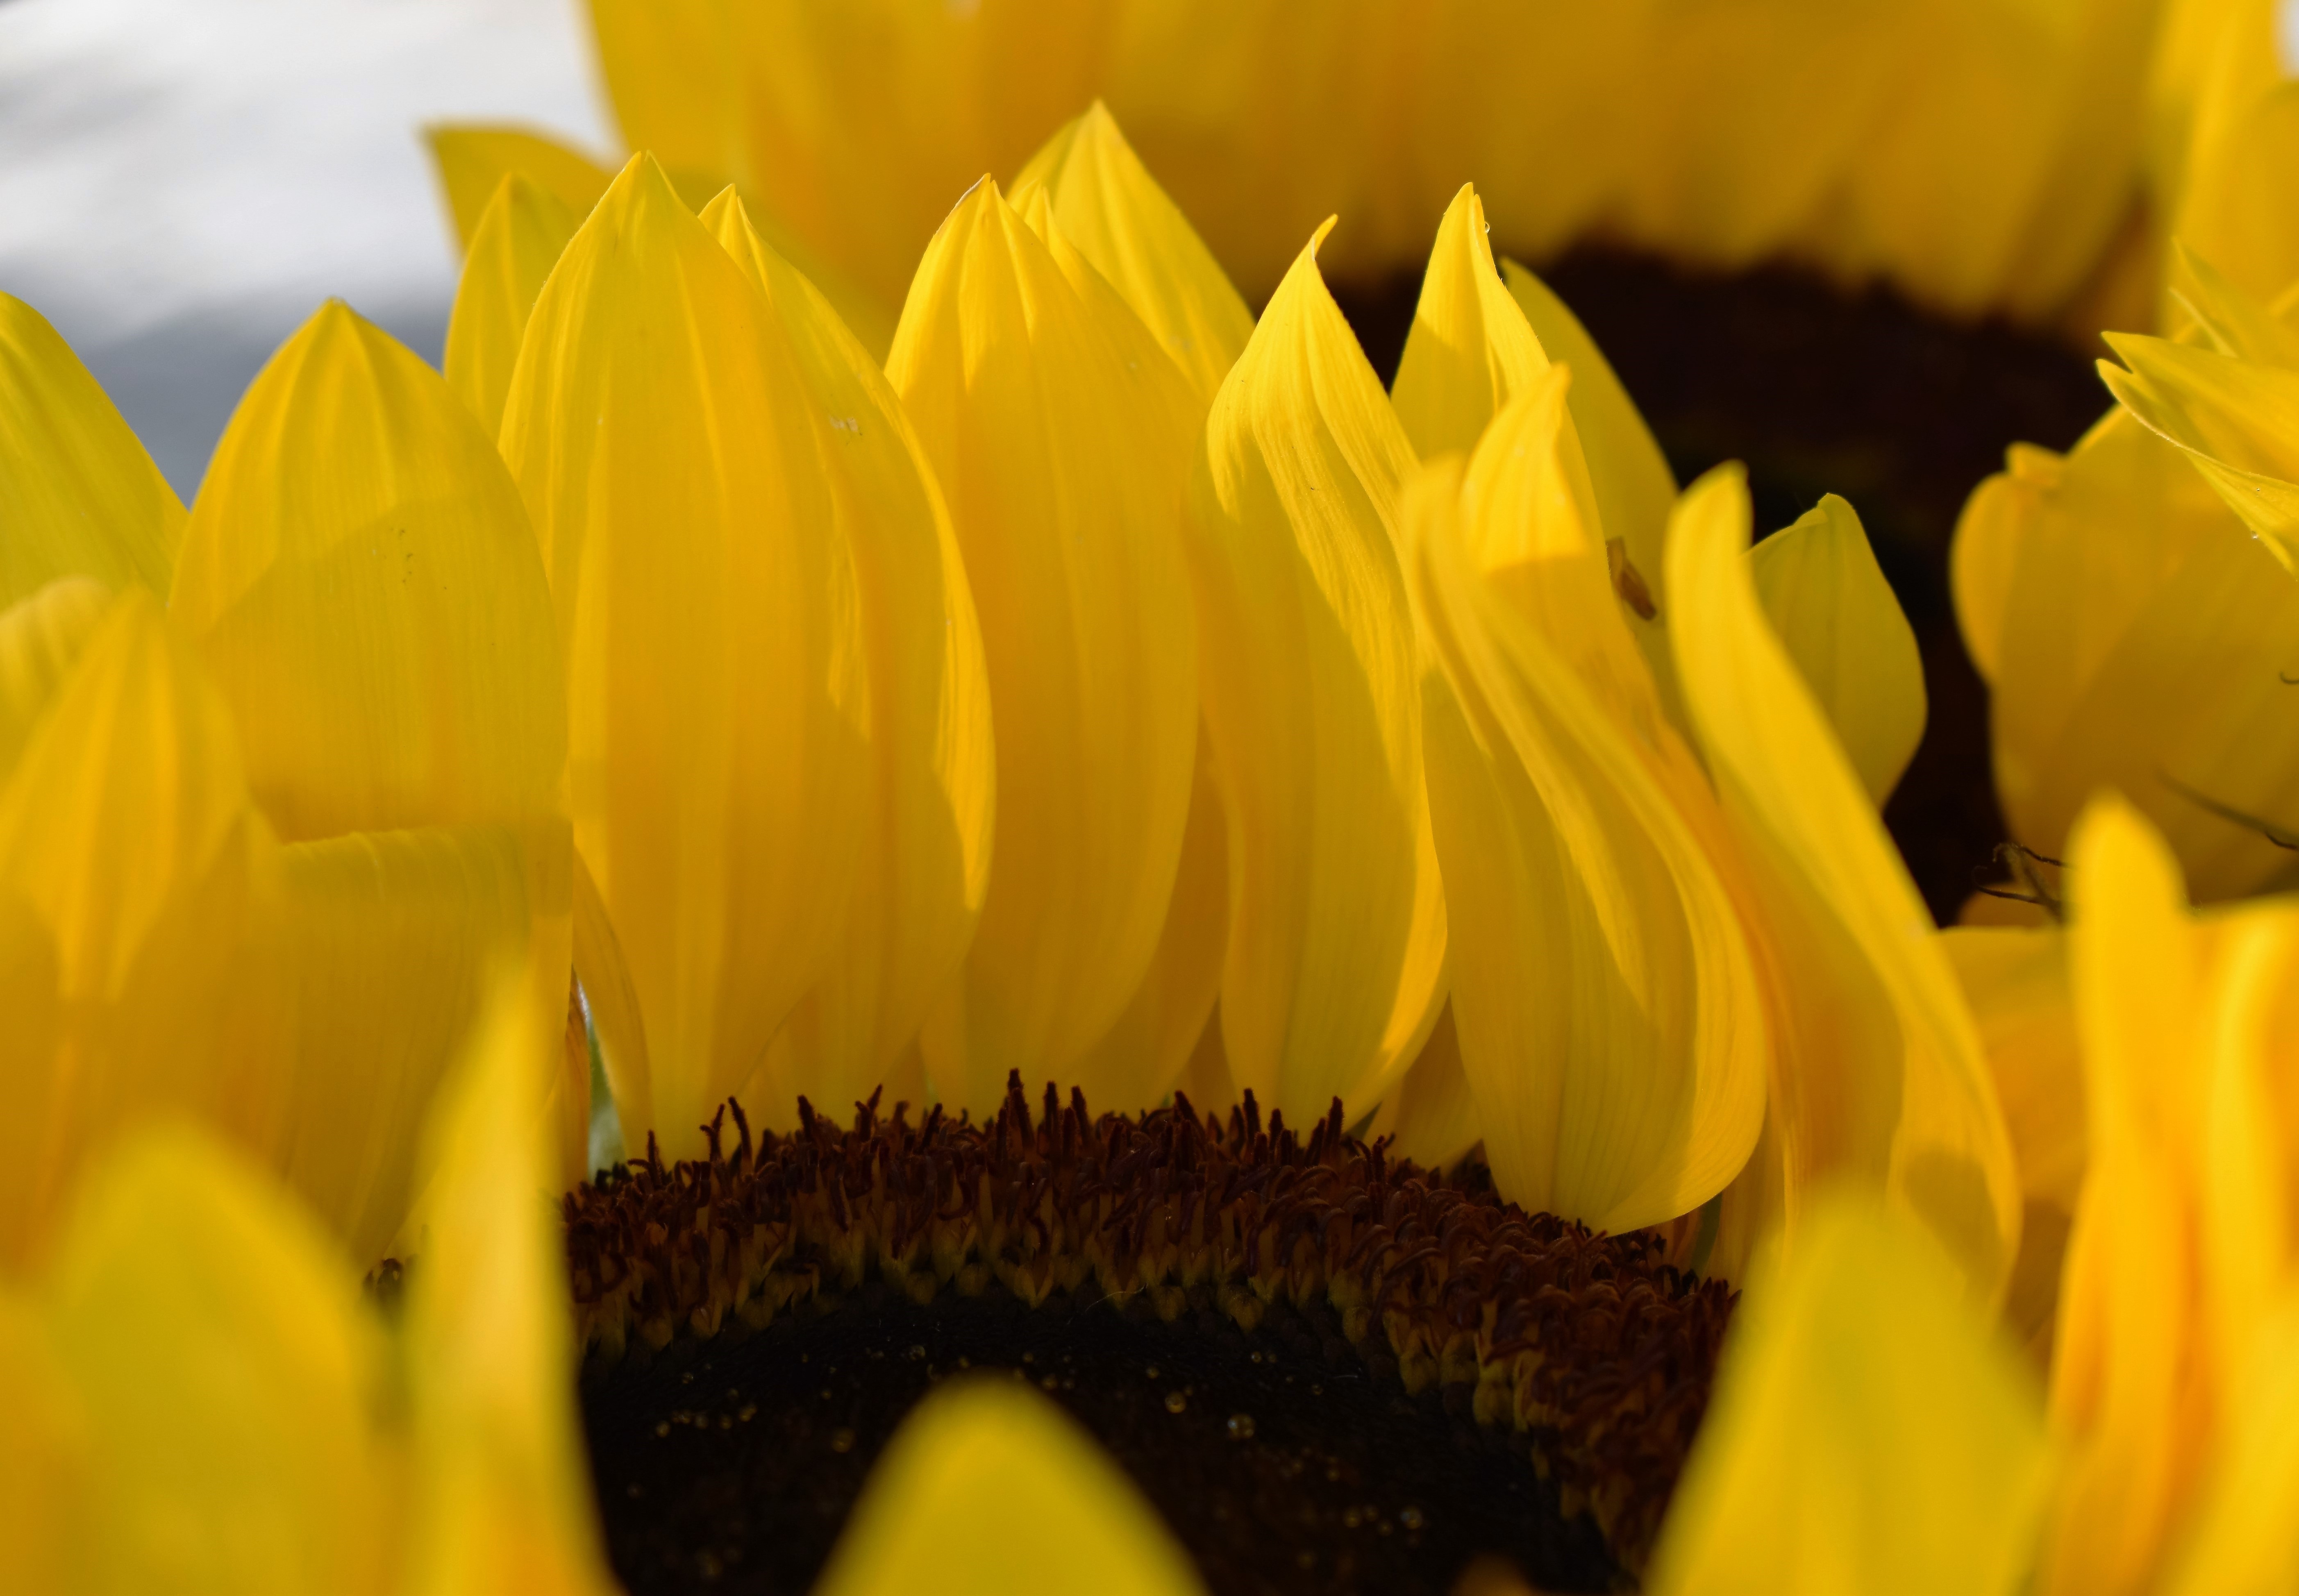 close up photo of yellow sunflower